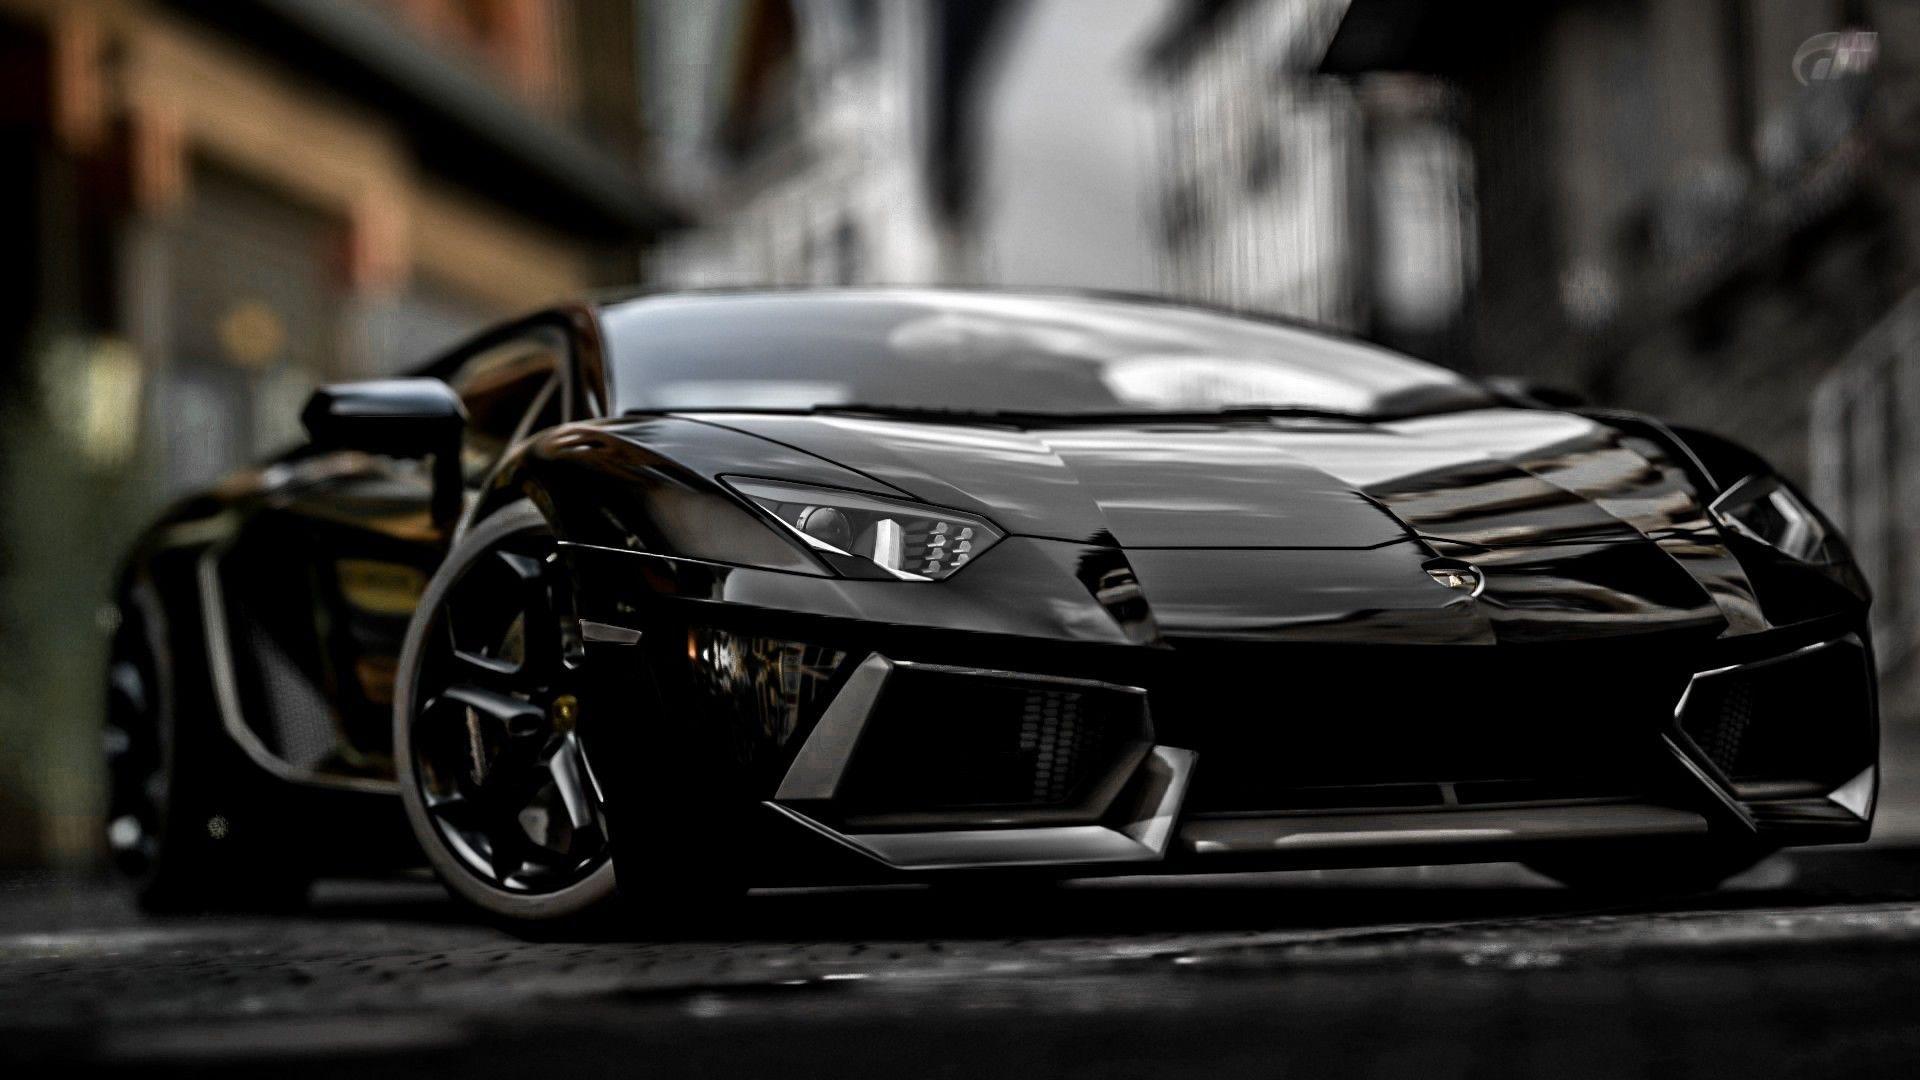 Lamborghini Aventador Black Front View Free Wallpaper HD